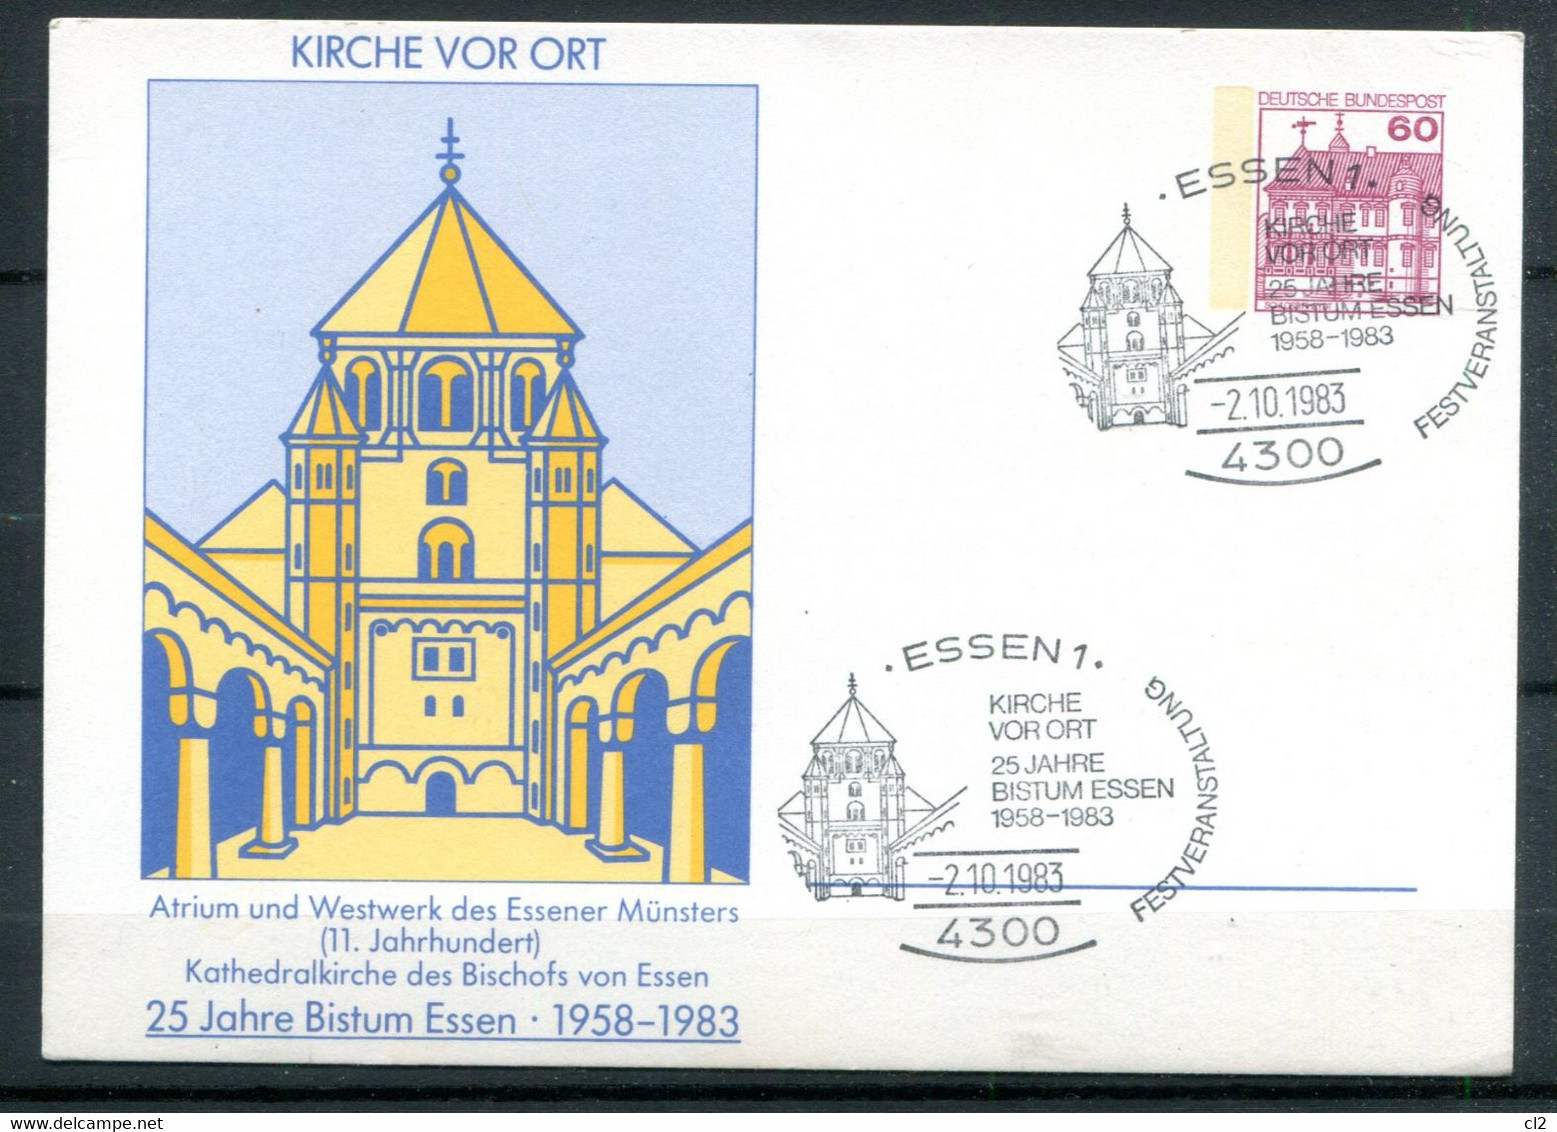 2.10.1983 - Kirche Vor Ort - 25 Jahre Bistum Essen - Cartes Postales Privées - Oblitérées